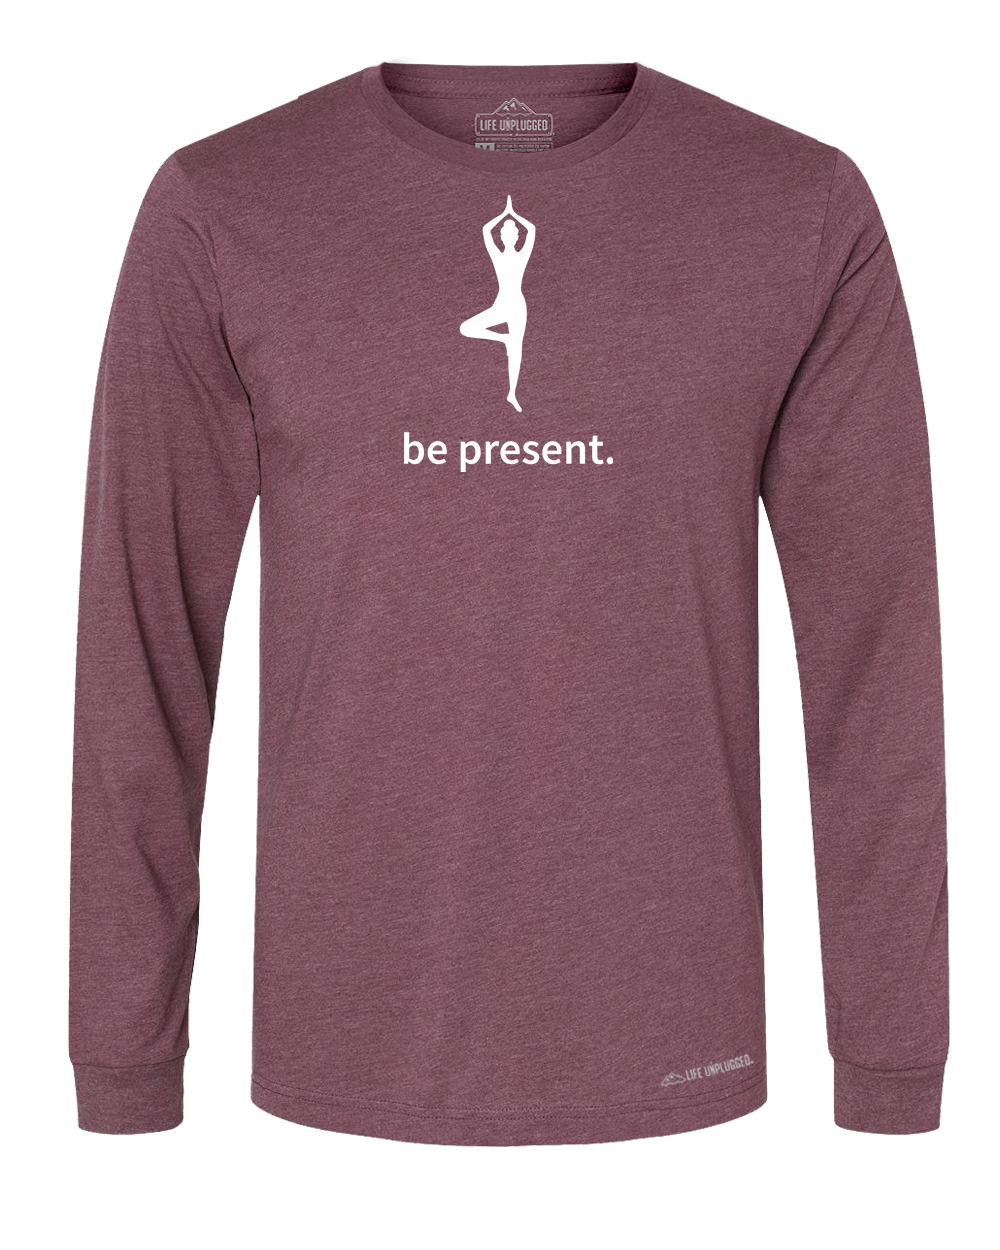 Yoga Premium Polyblend Long Sleeve T-Shirt - Life Unplugged